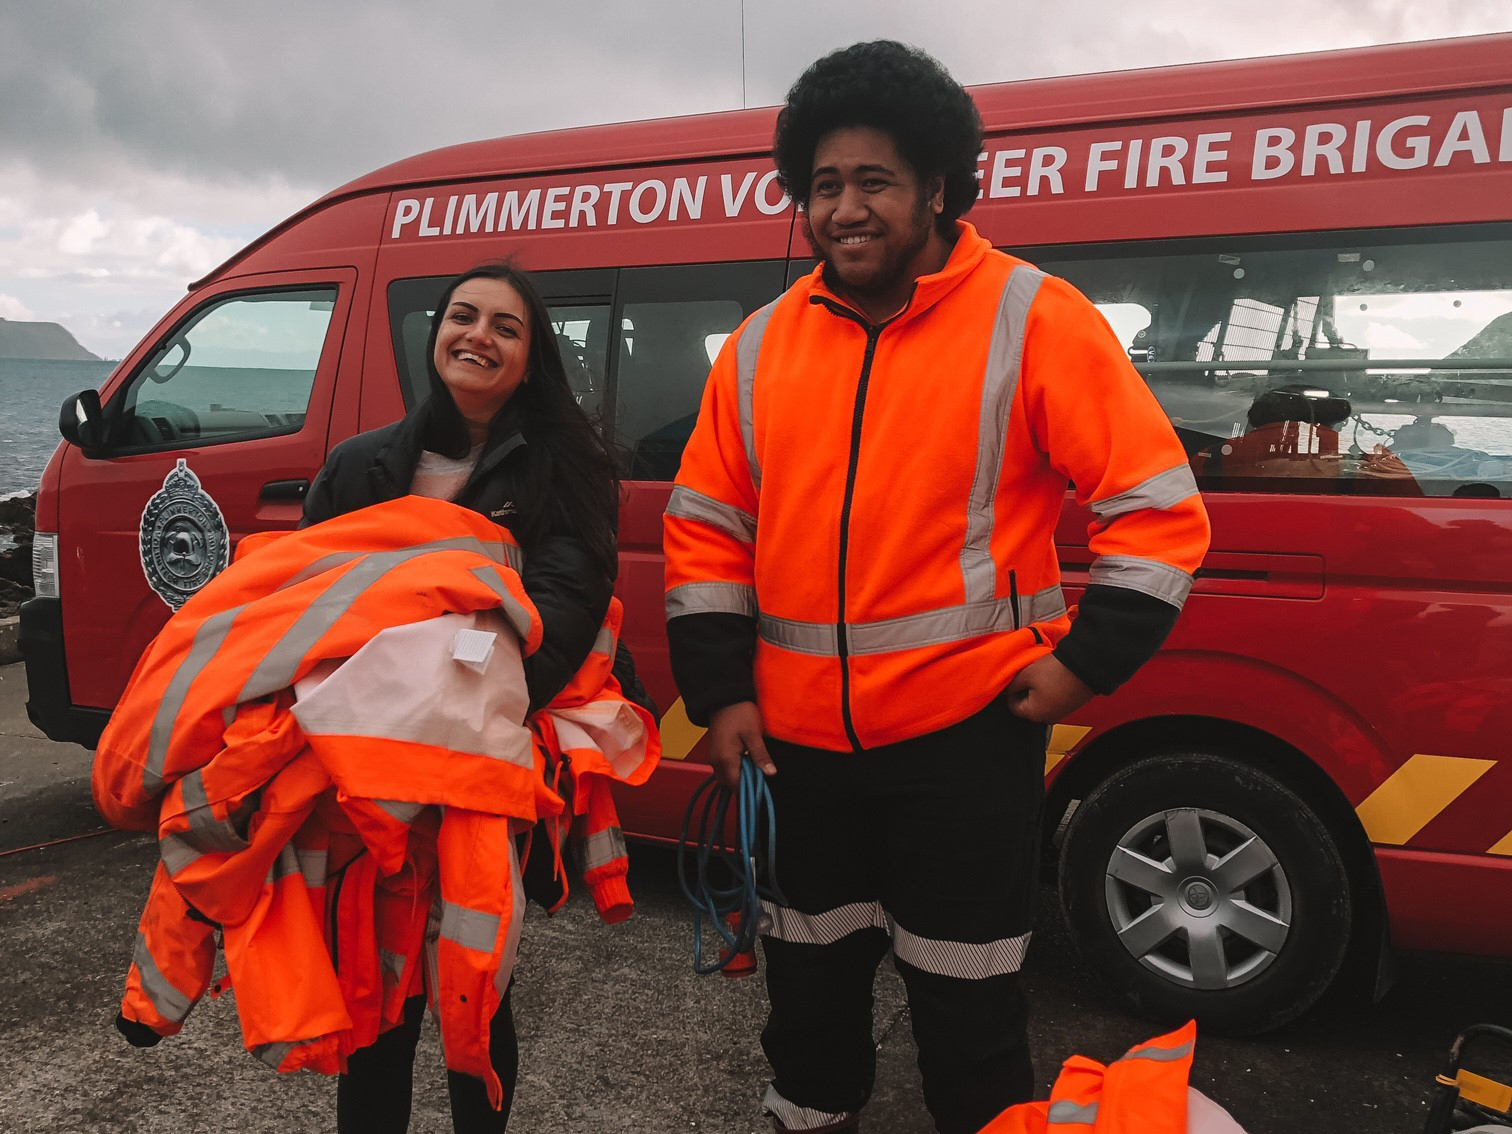 Two people holding and wearing Hi Vis jackets standing in front of Plimmerton Volunteer Fire Brigade van.